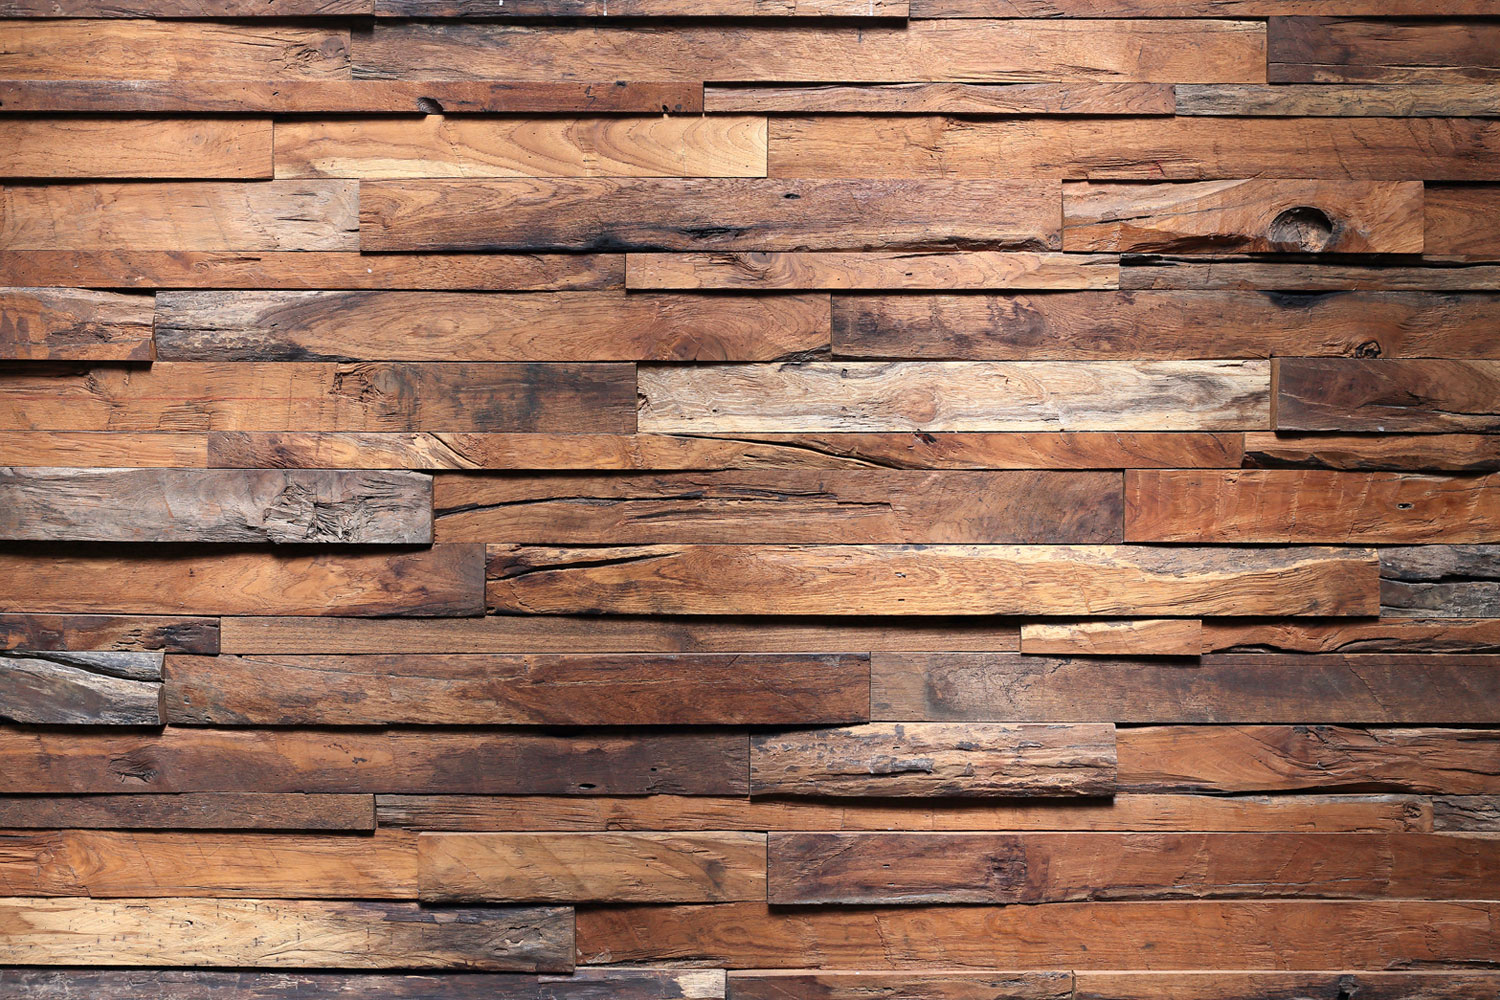 Rough Wooden Planks. Print A Wallpaper